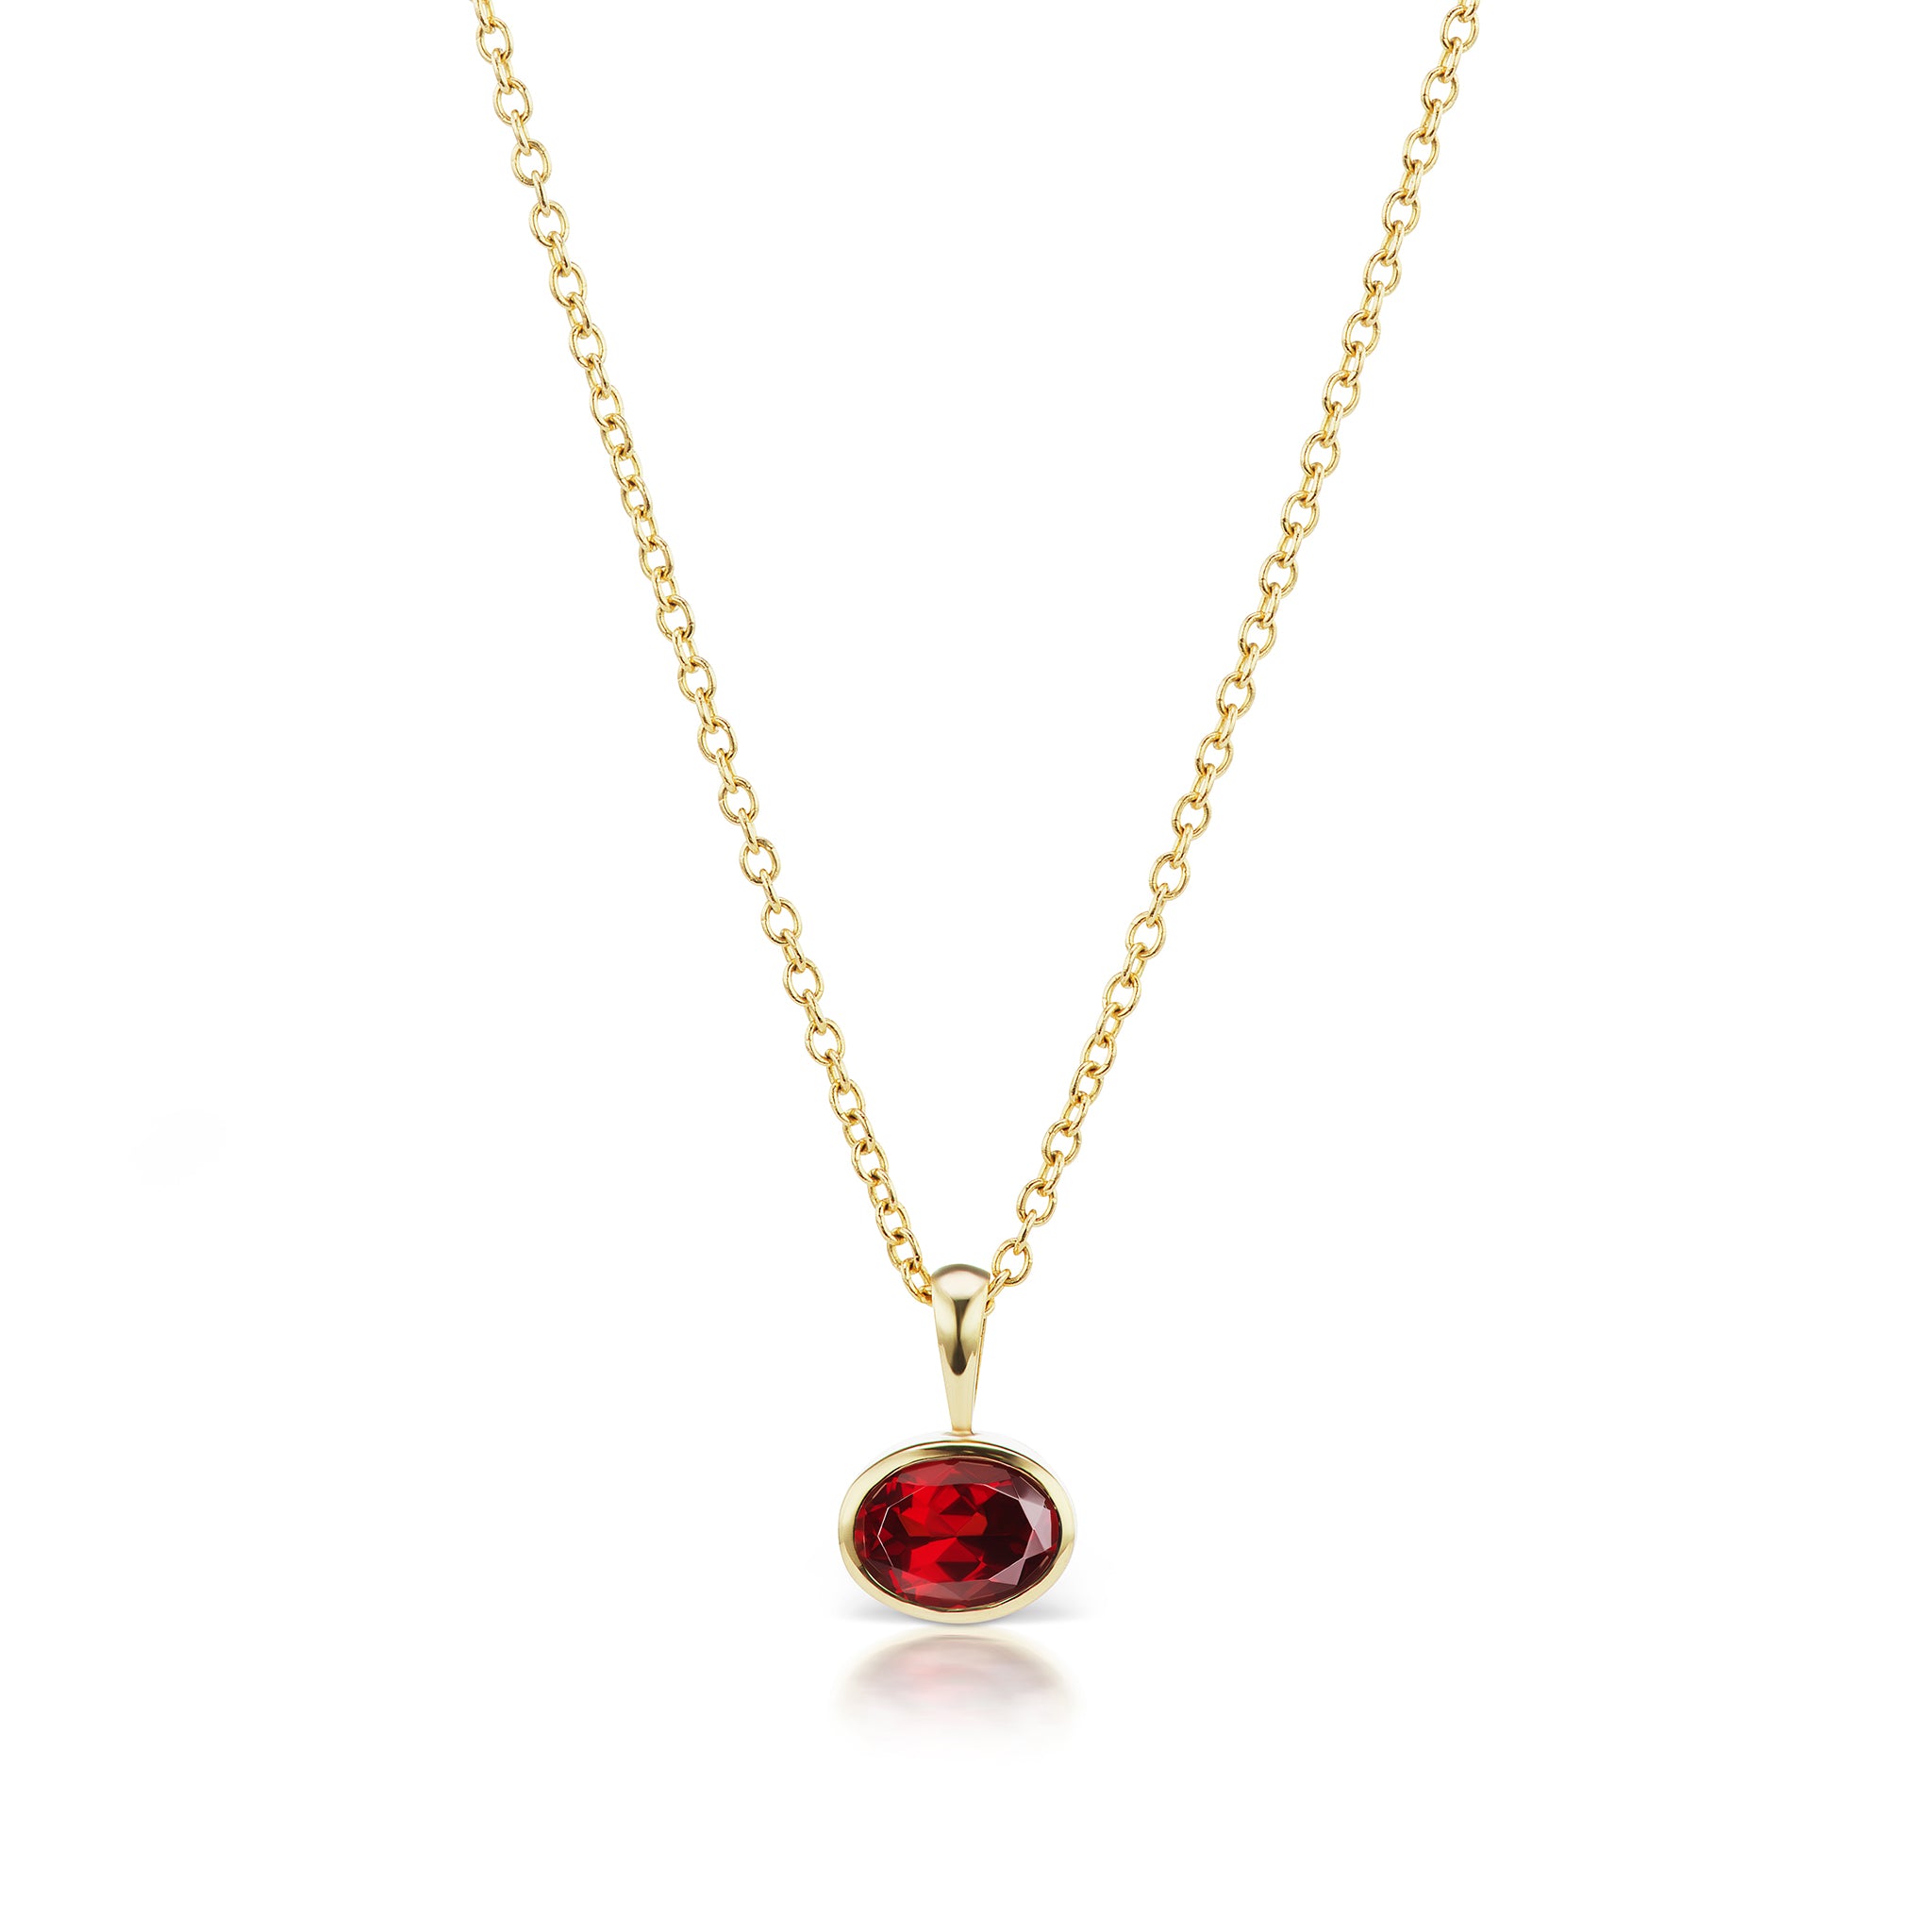 The Garnet Amber Necklace